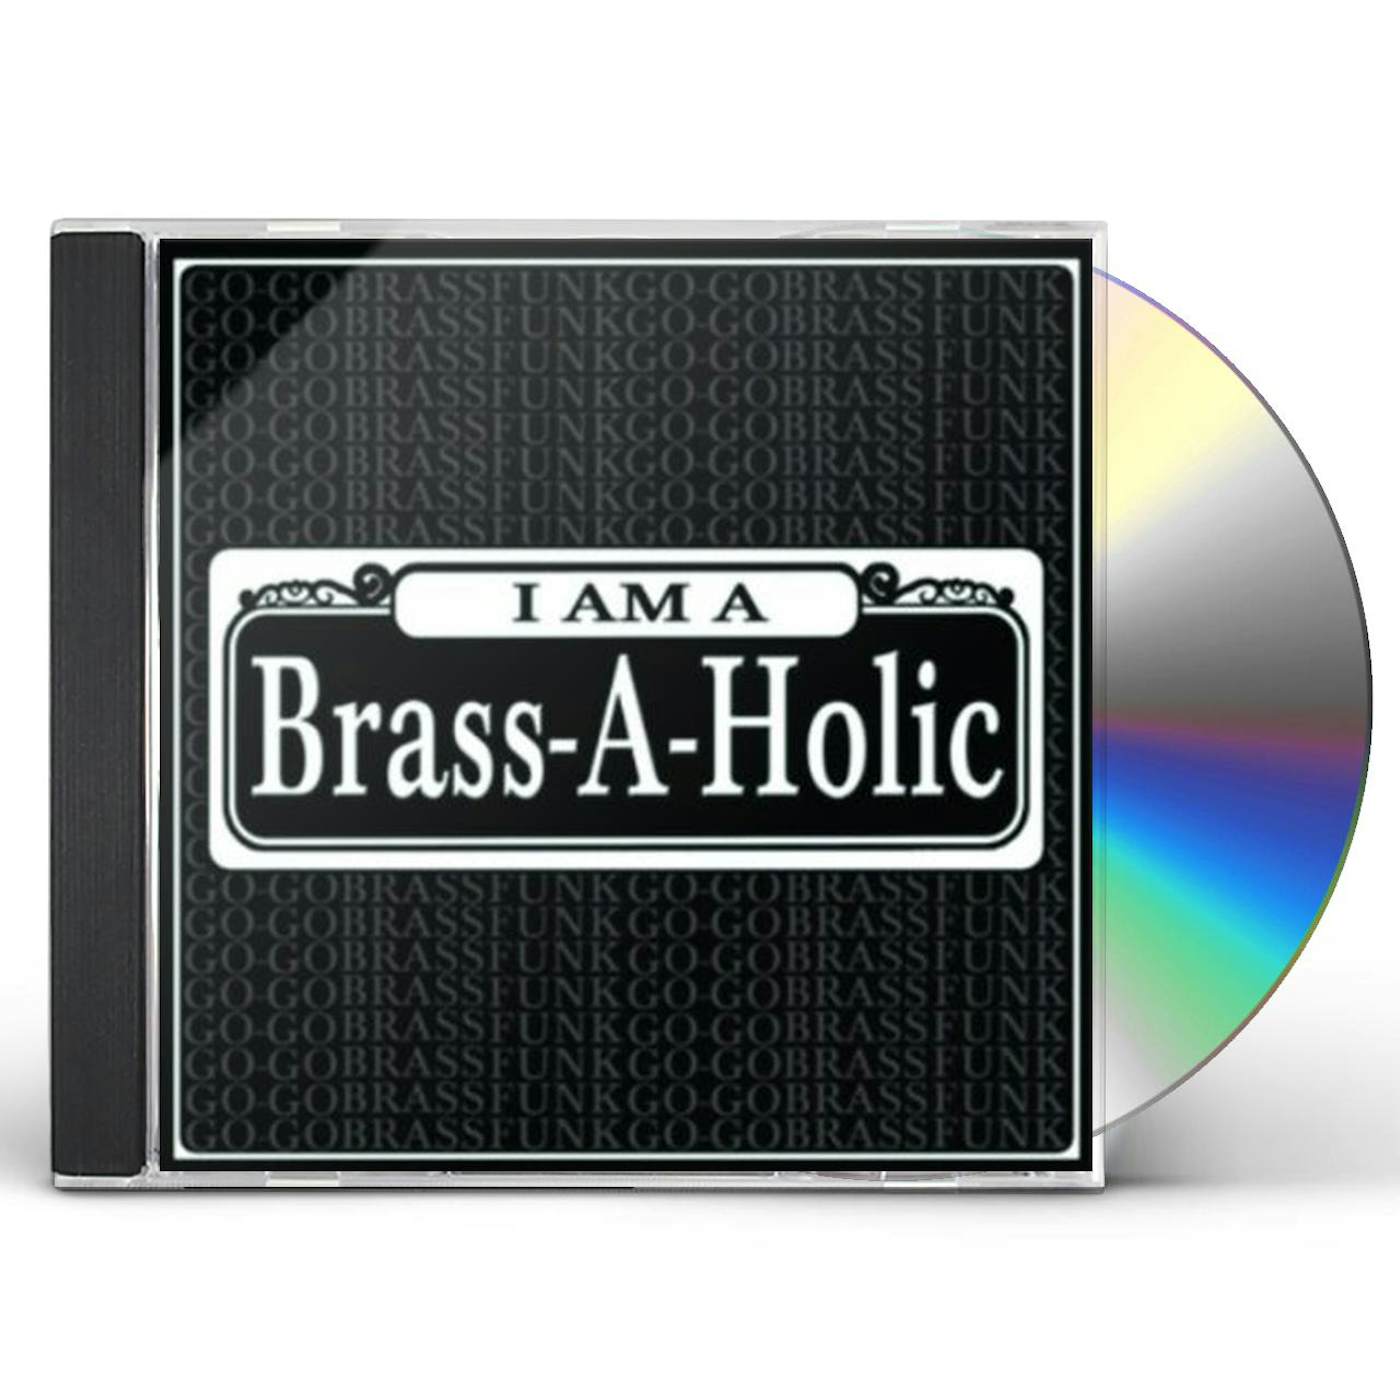 Brass-A-Holics I AM A BRASS-A-HOLIC CD